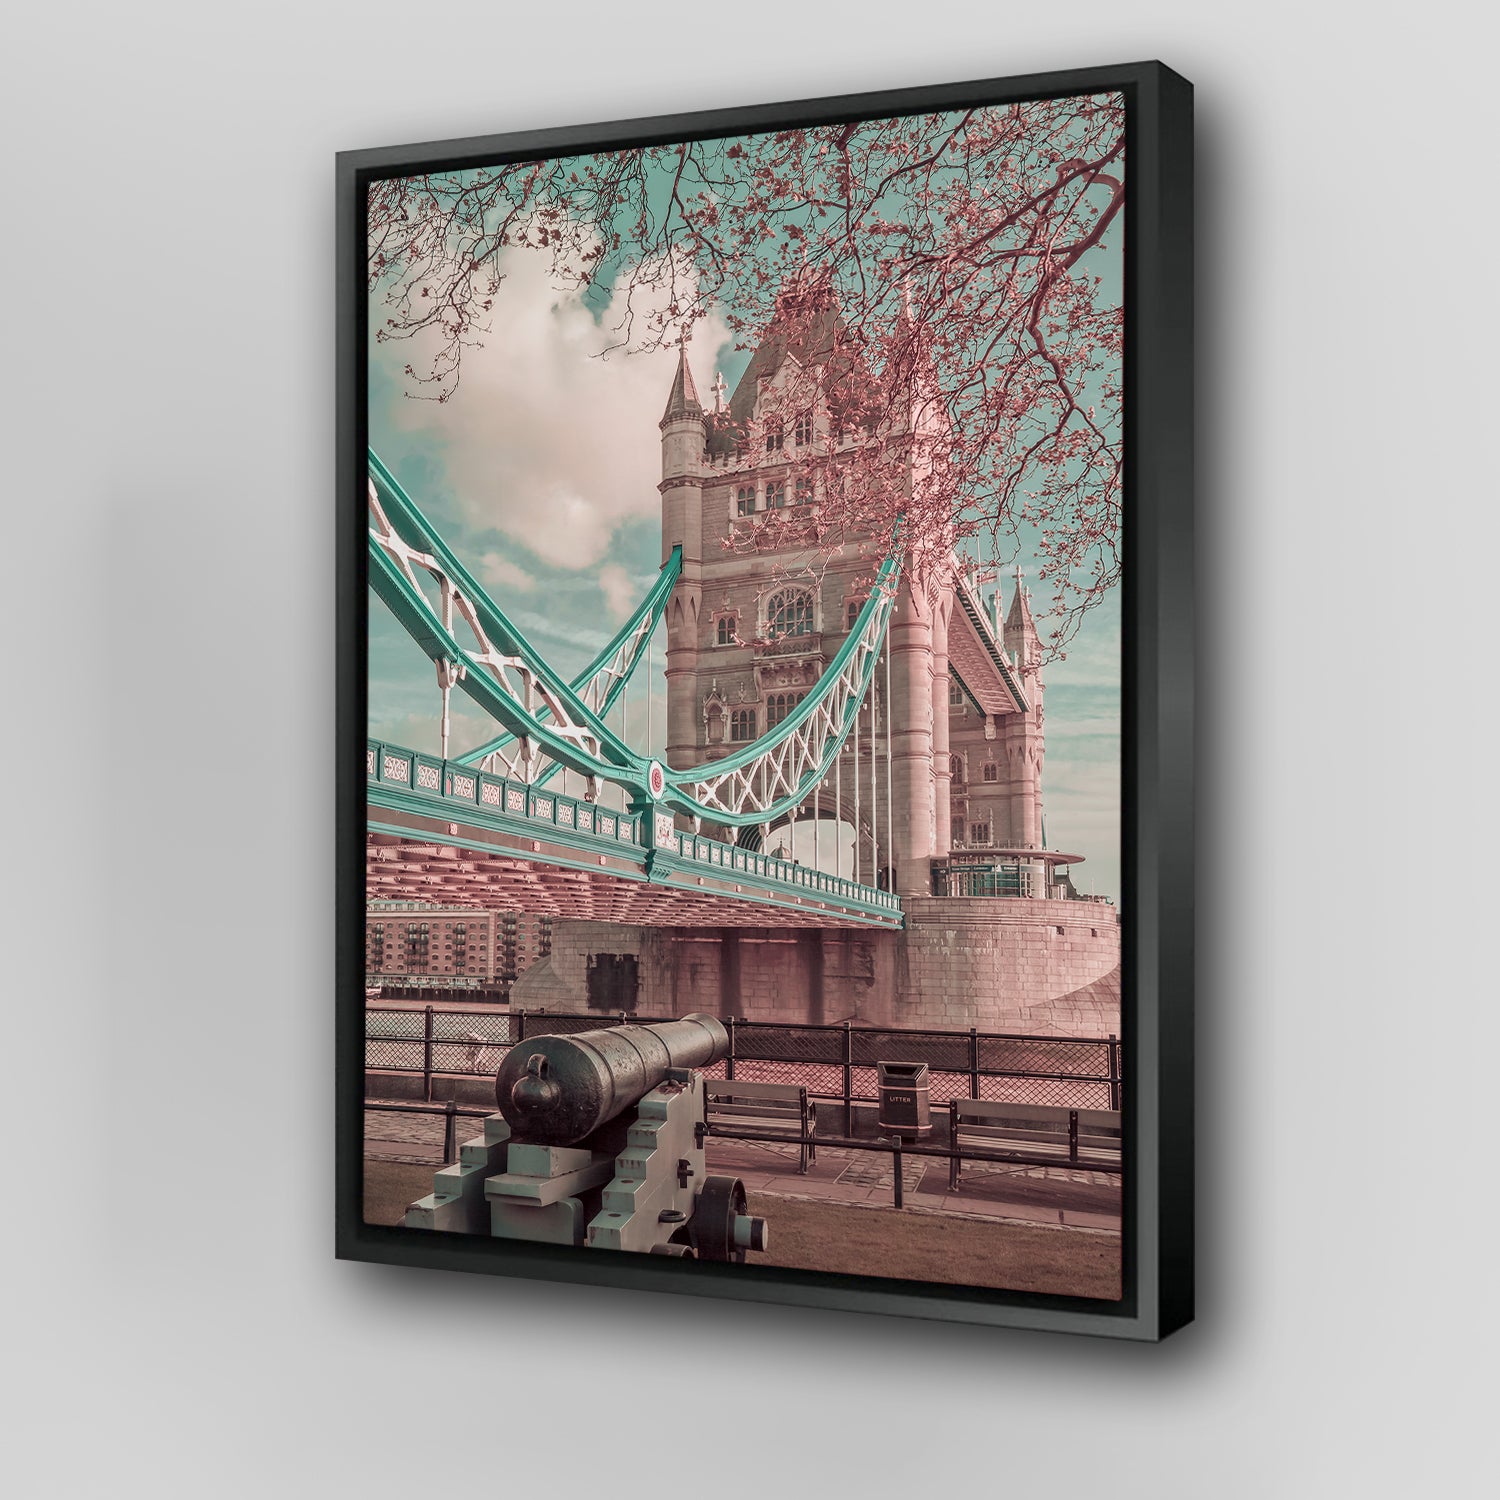 London Tower Bridge in Detail